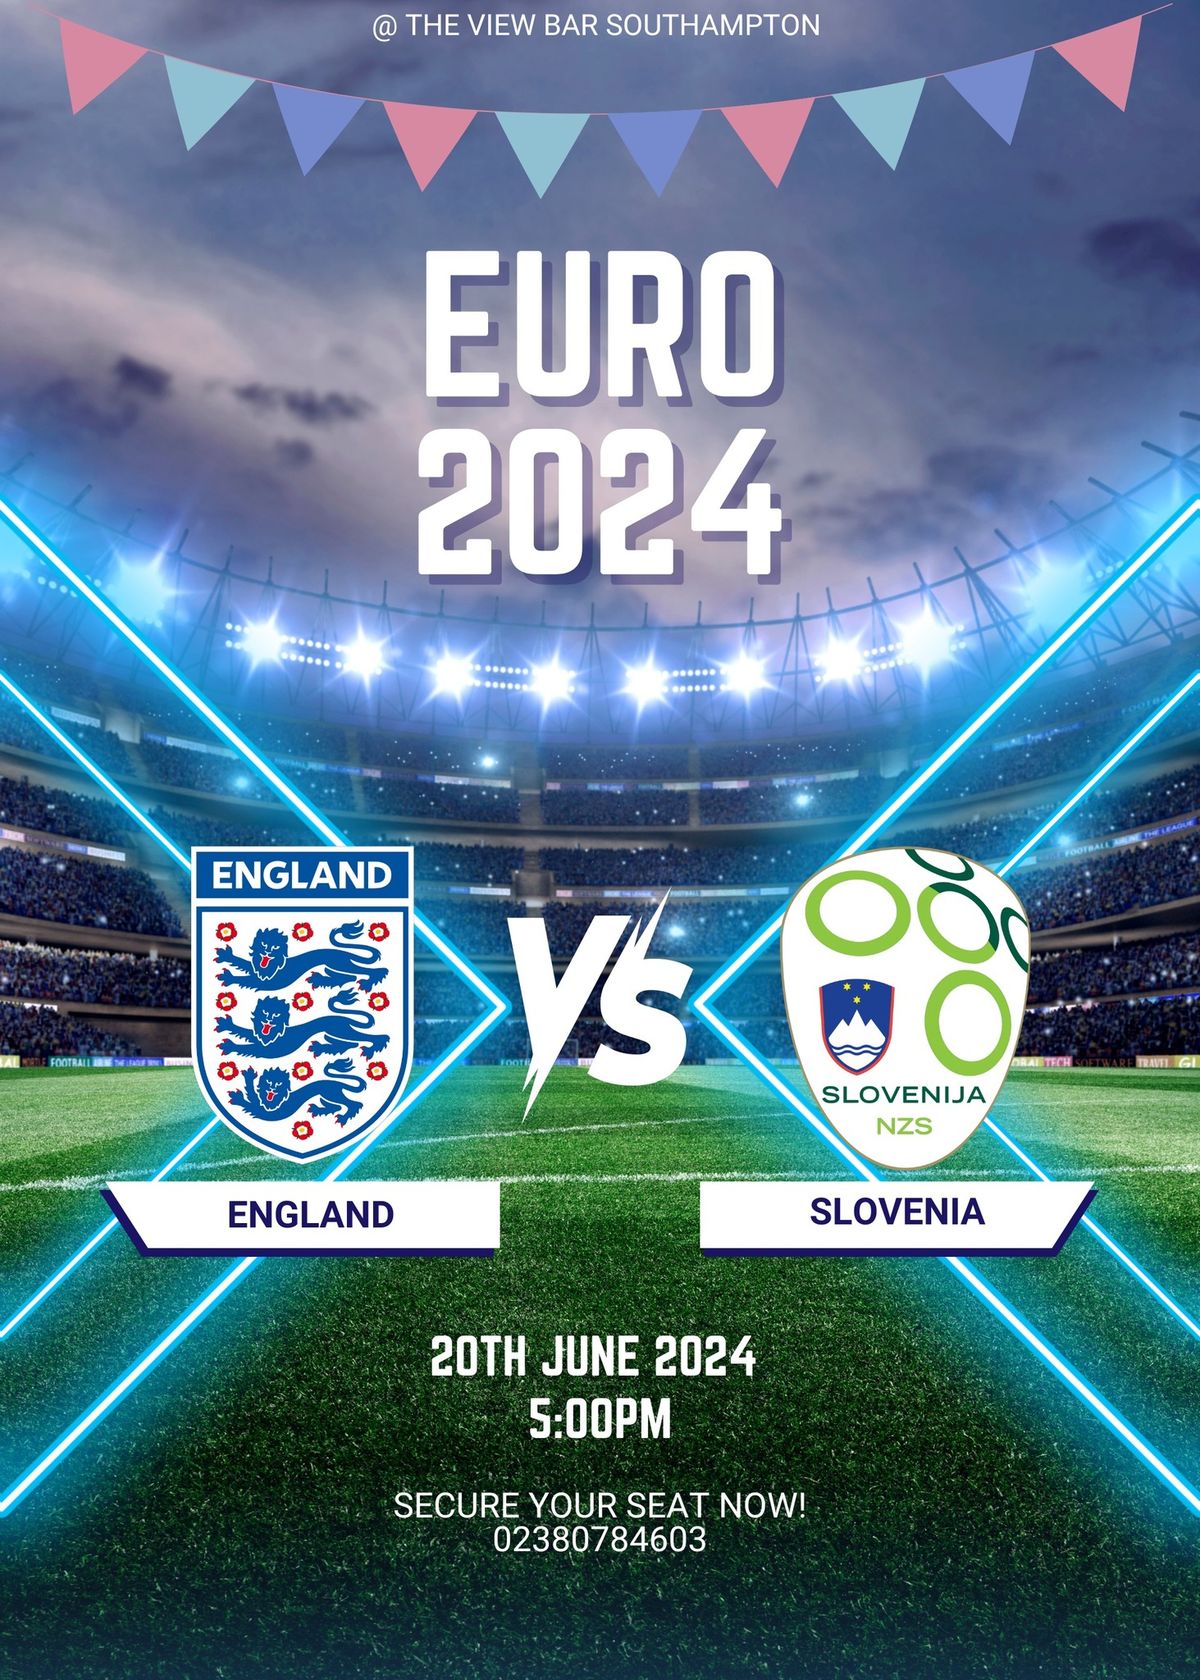 EURO 2024 - ENGLAND VS SLOVENIA